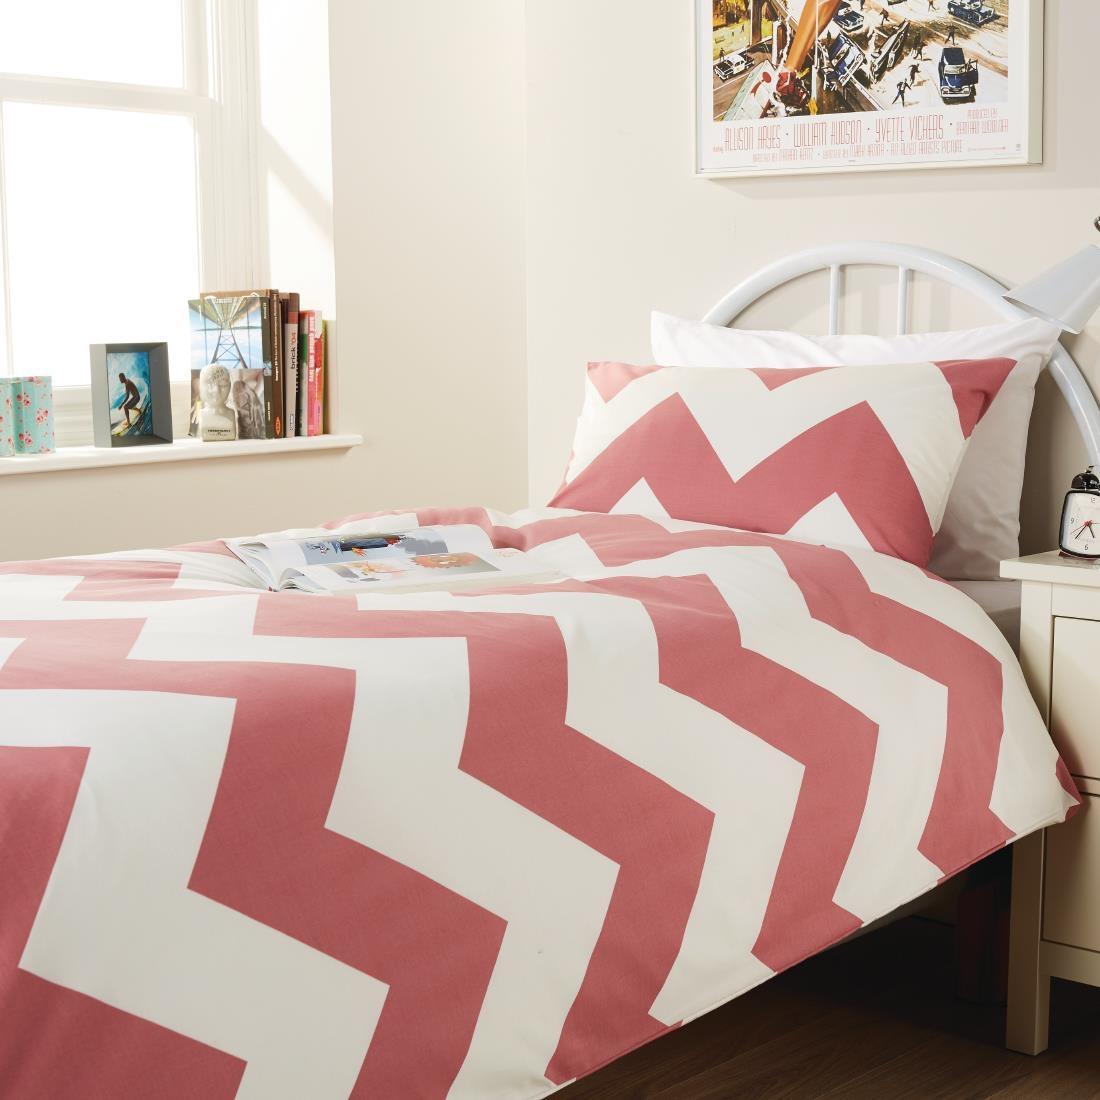 Mitre Comfort New York Pink Bedding Set Single - HB516  - 1